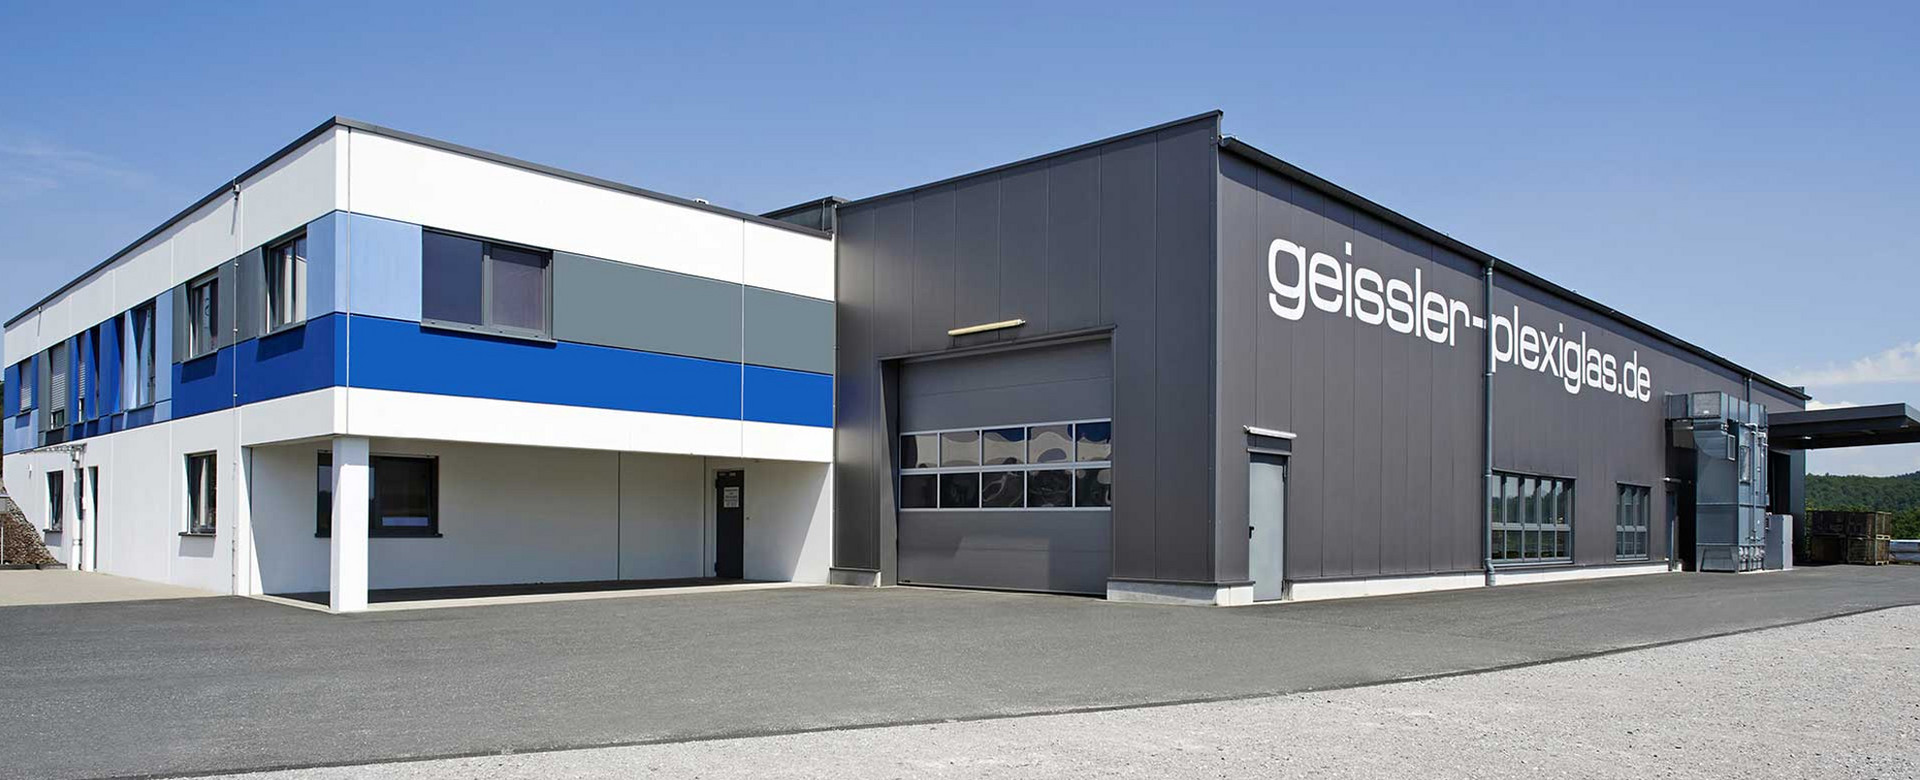 Herbert Geißler GmbH & Co. KG